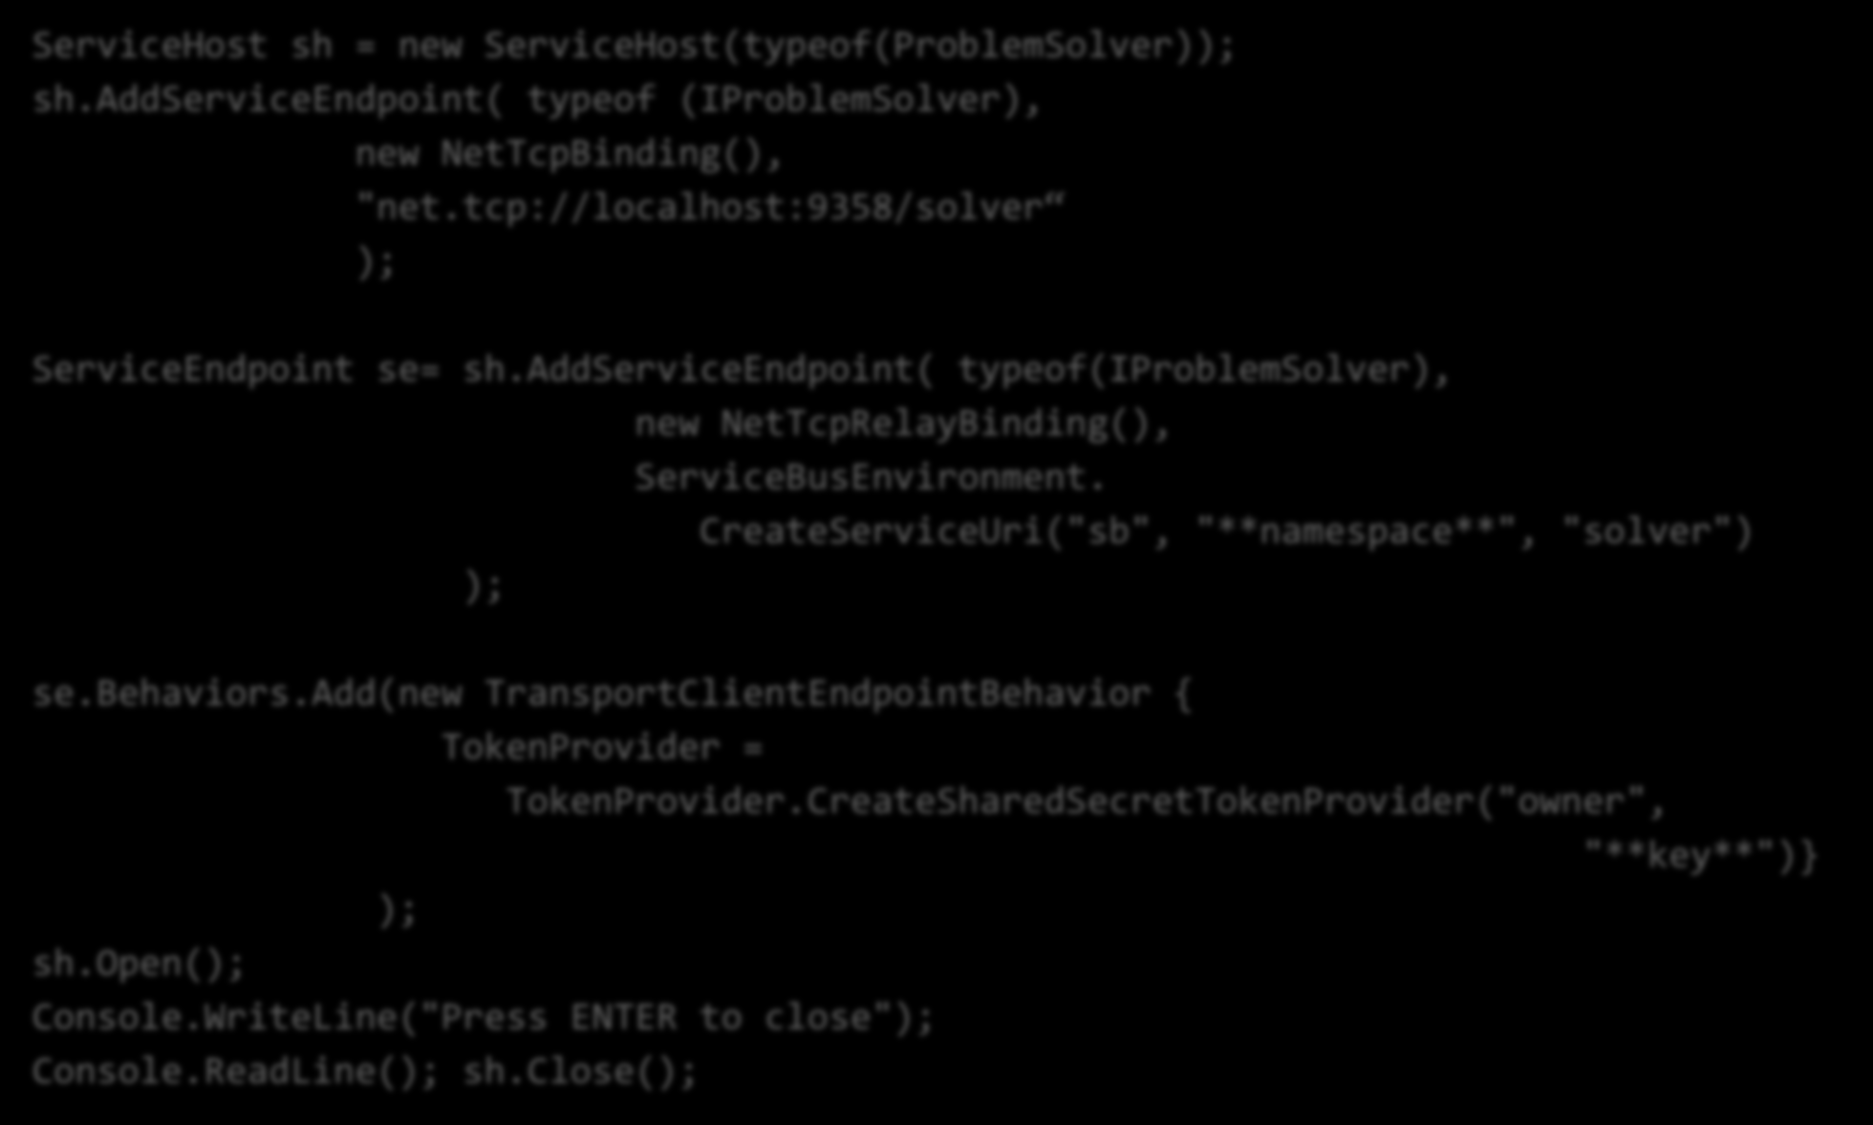 System.ServiceModel.ServiceHost ServiceHost sh = new ServiceHost(typeof(ProblemSolver)); sh.addserviceendpoint( typeof (IProblemSolver), new NetTcpBinding(), "net.